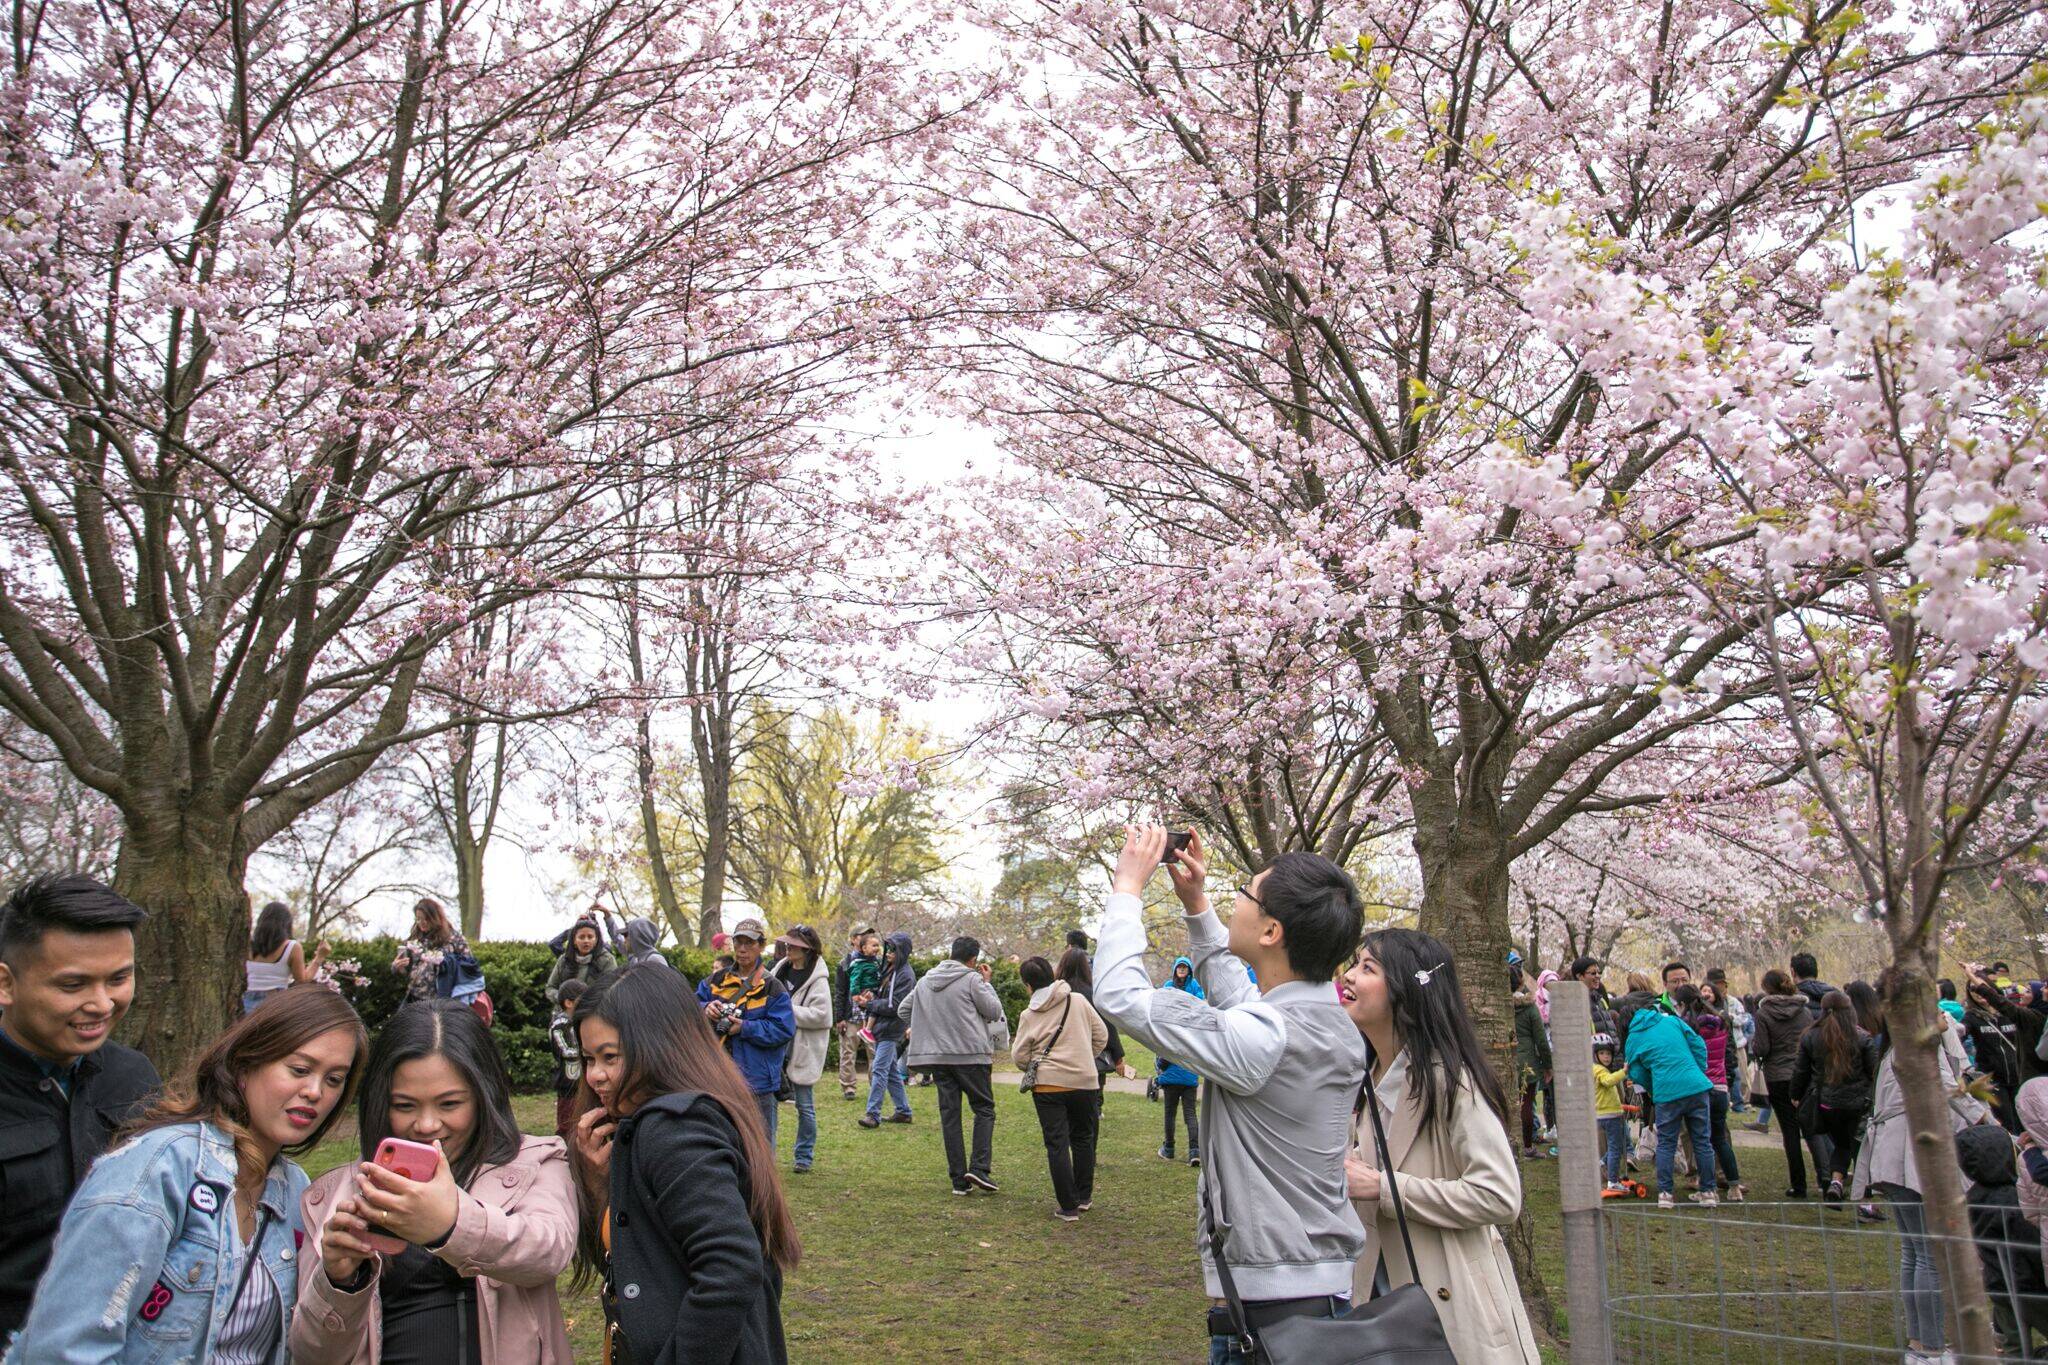 high park cherry blossoms 2020